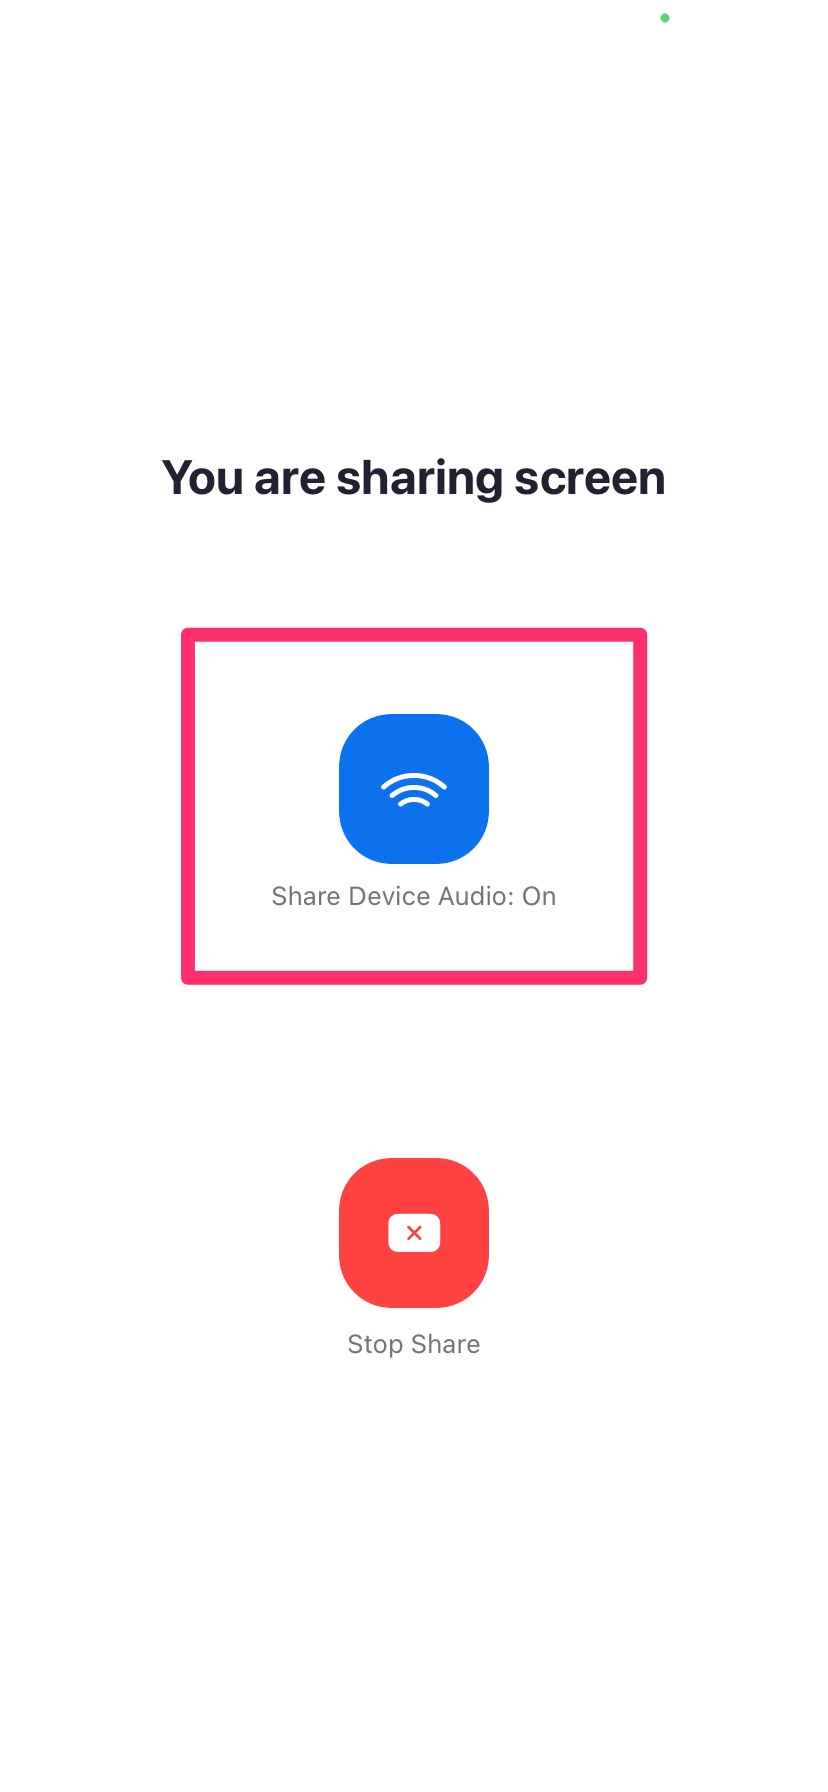 Screenshot indicating that you are sharing your screen and are sharing your device audio.